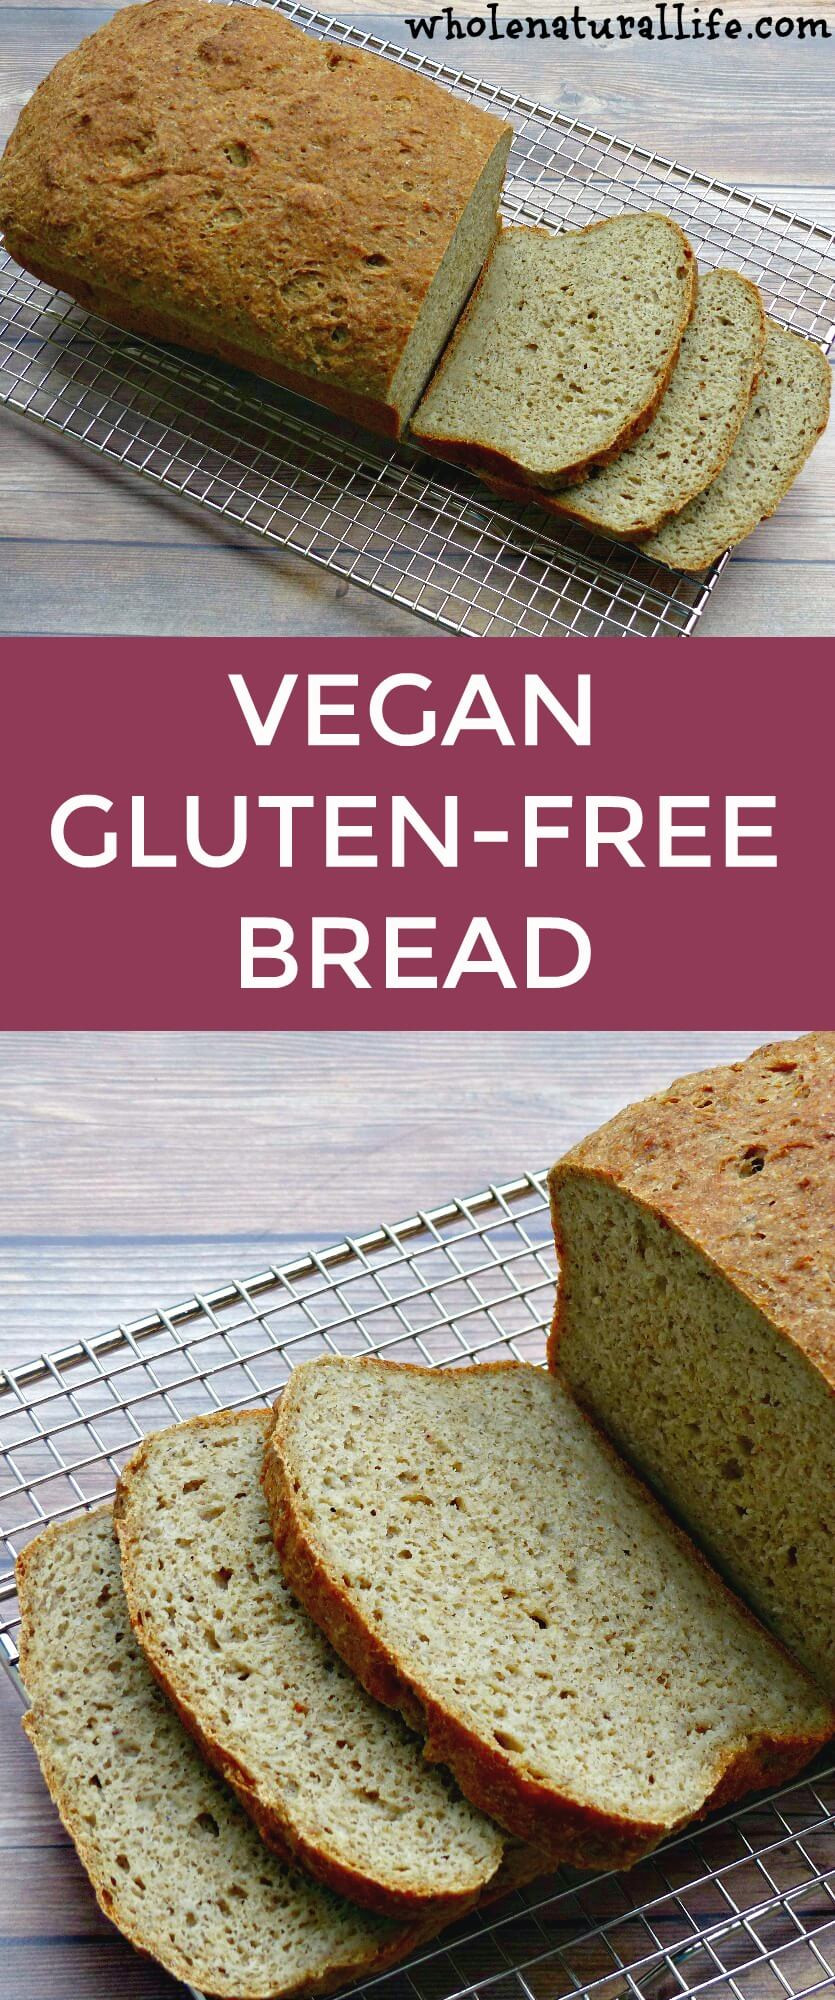 Gluten Free Bread Videos
 Vegan Gluten free Bread Whole Natural Life